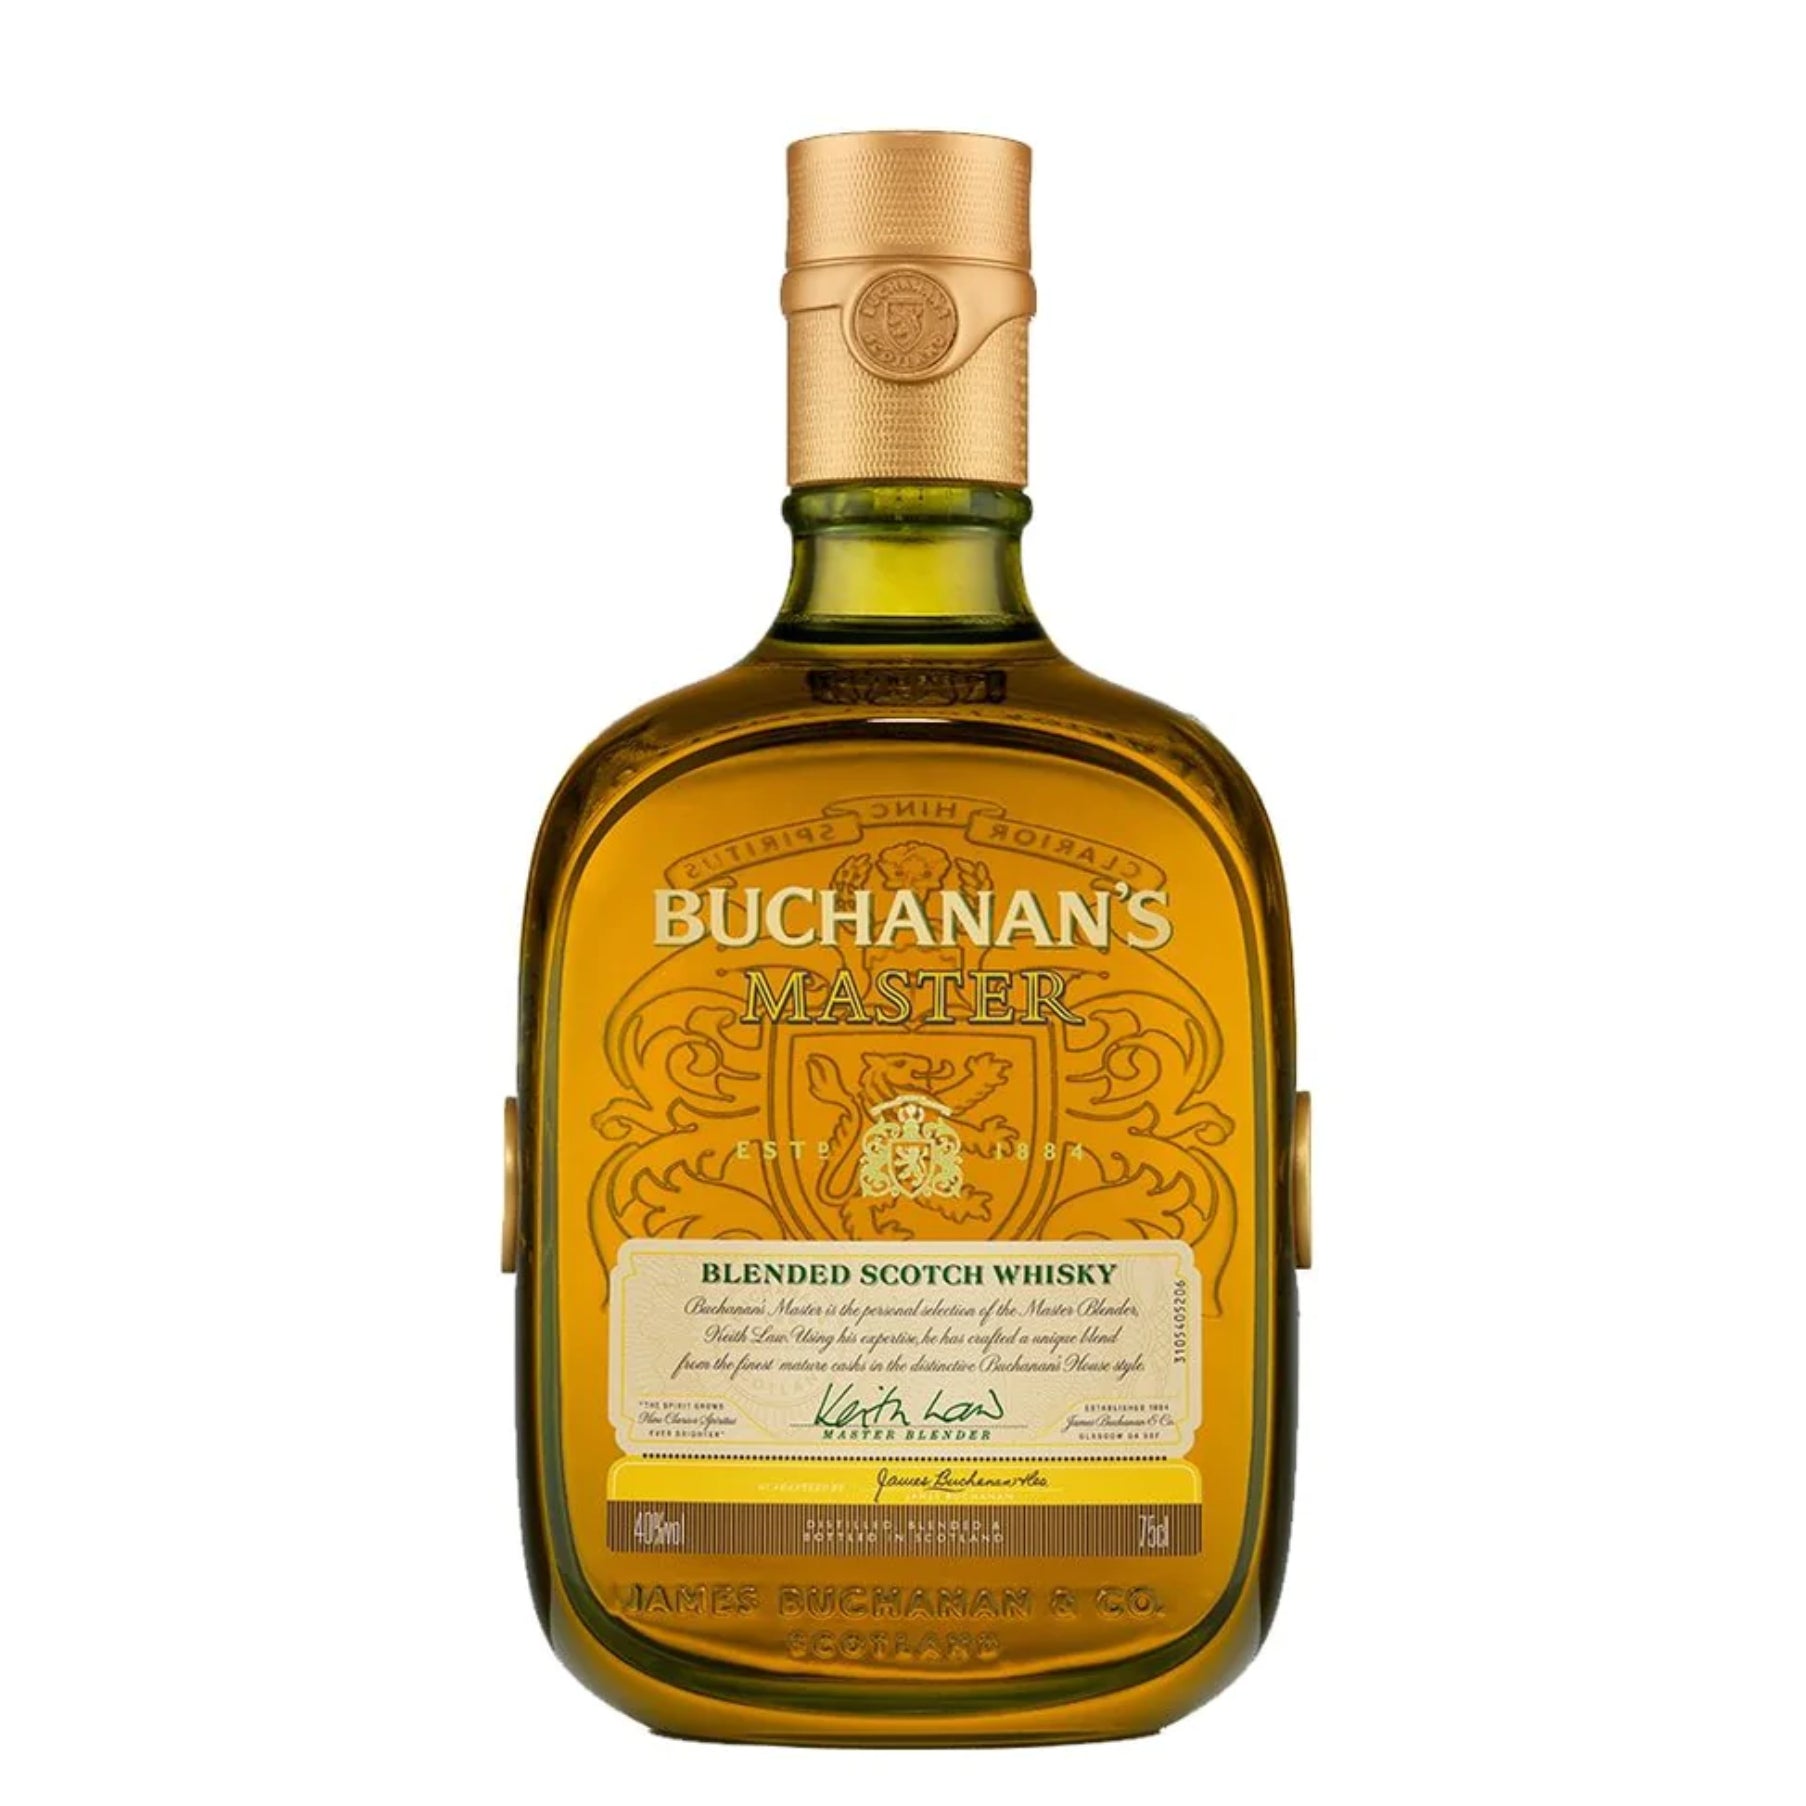 Vandalir Gracia Humanista Buchanan's Master Blended Scotch Whisky 750ml | ShopSK